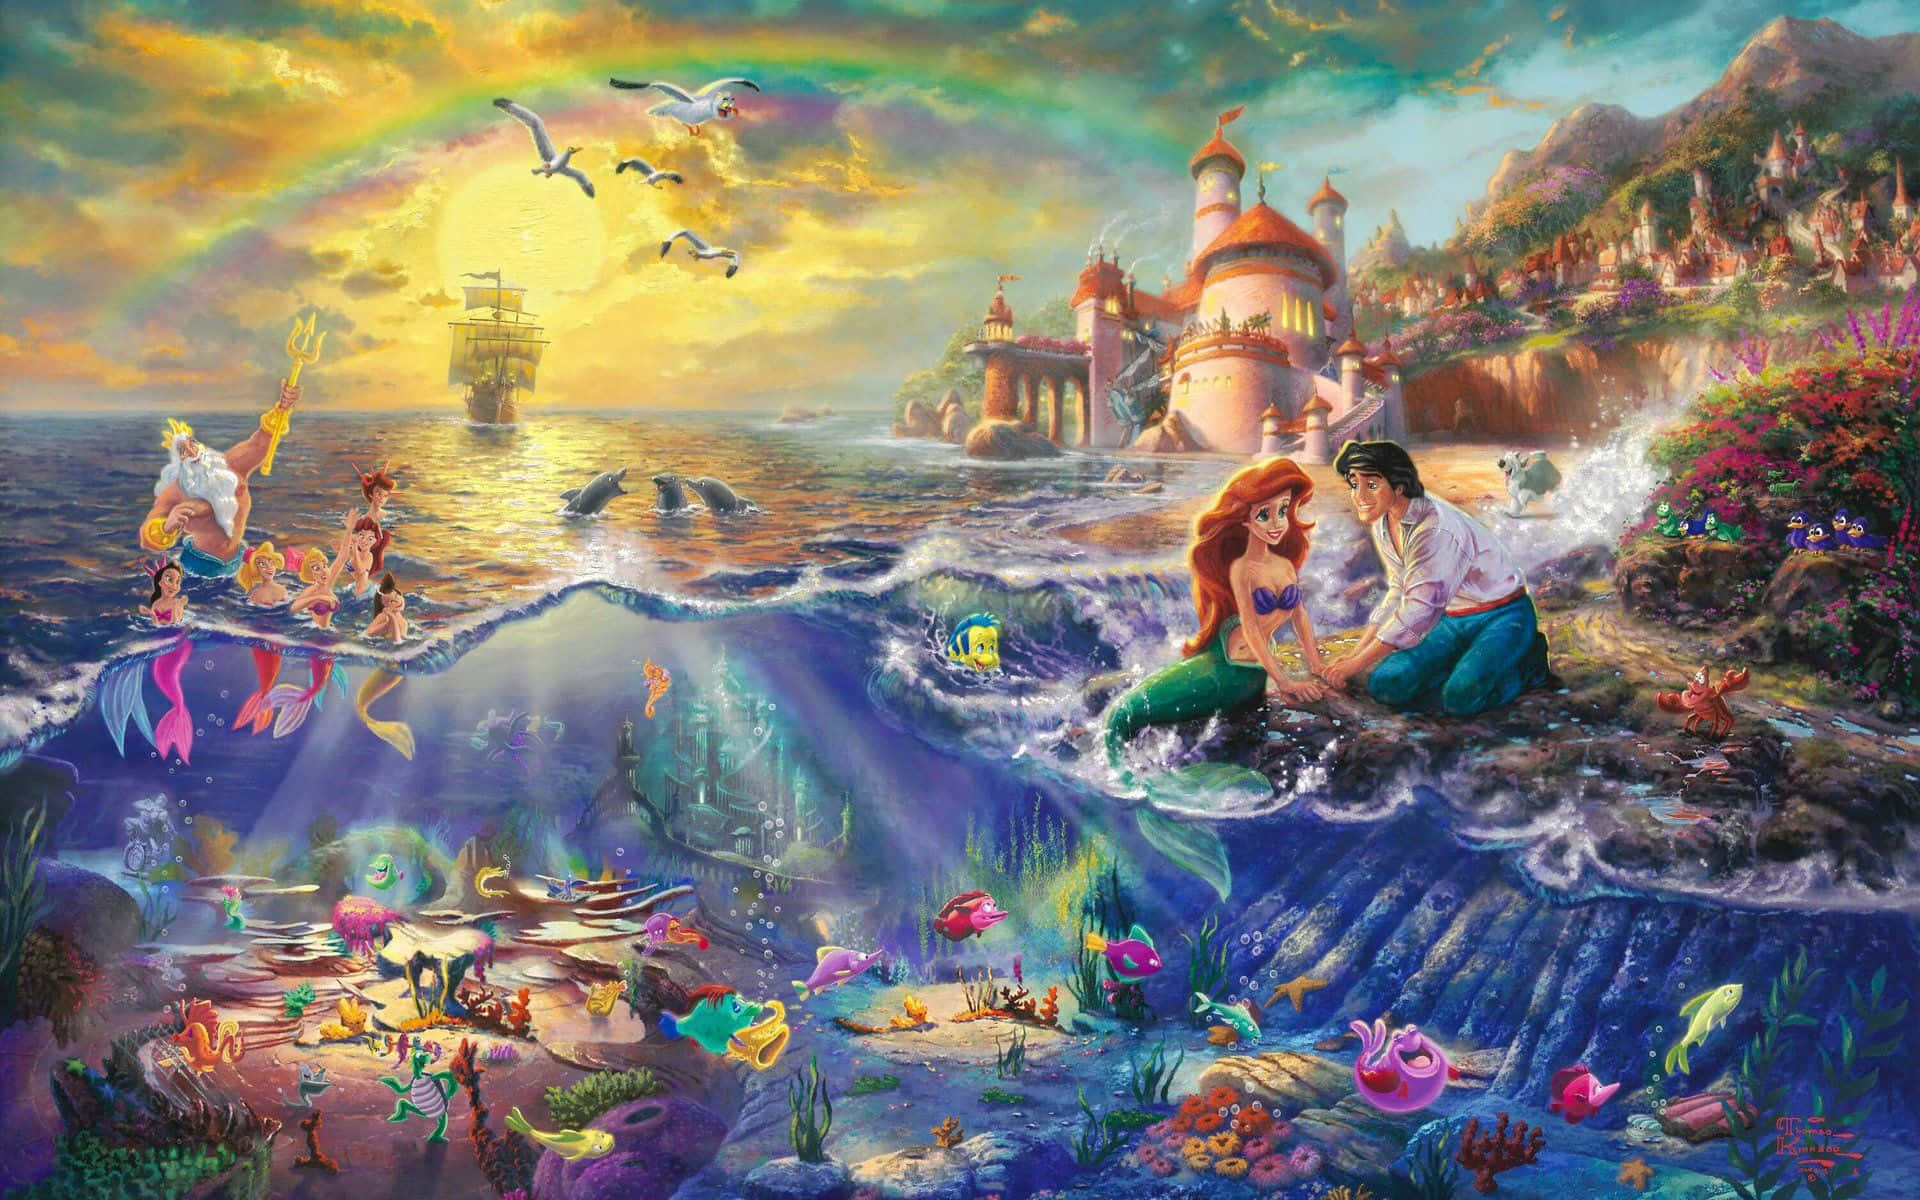 "Ariel the Little Mermaid Swims in the Ocean"